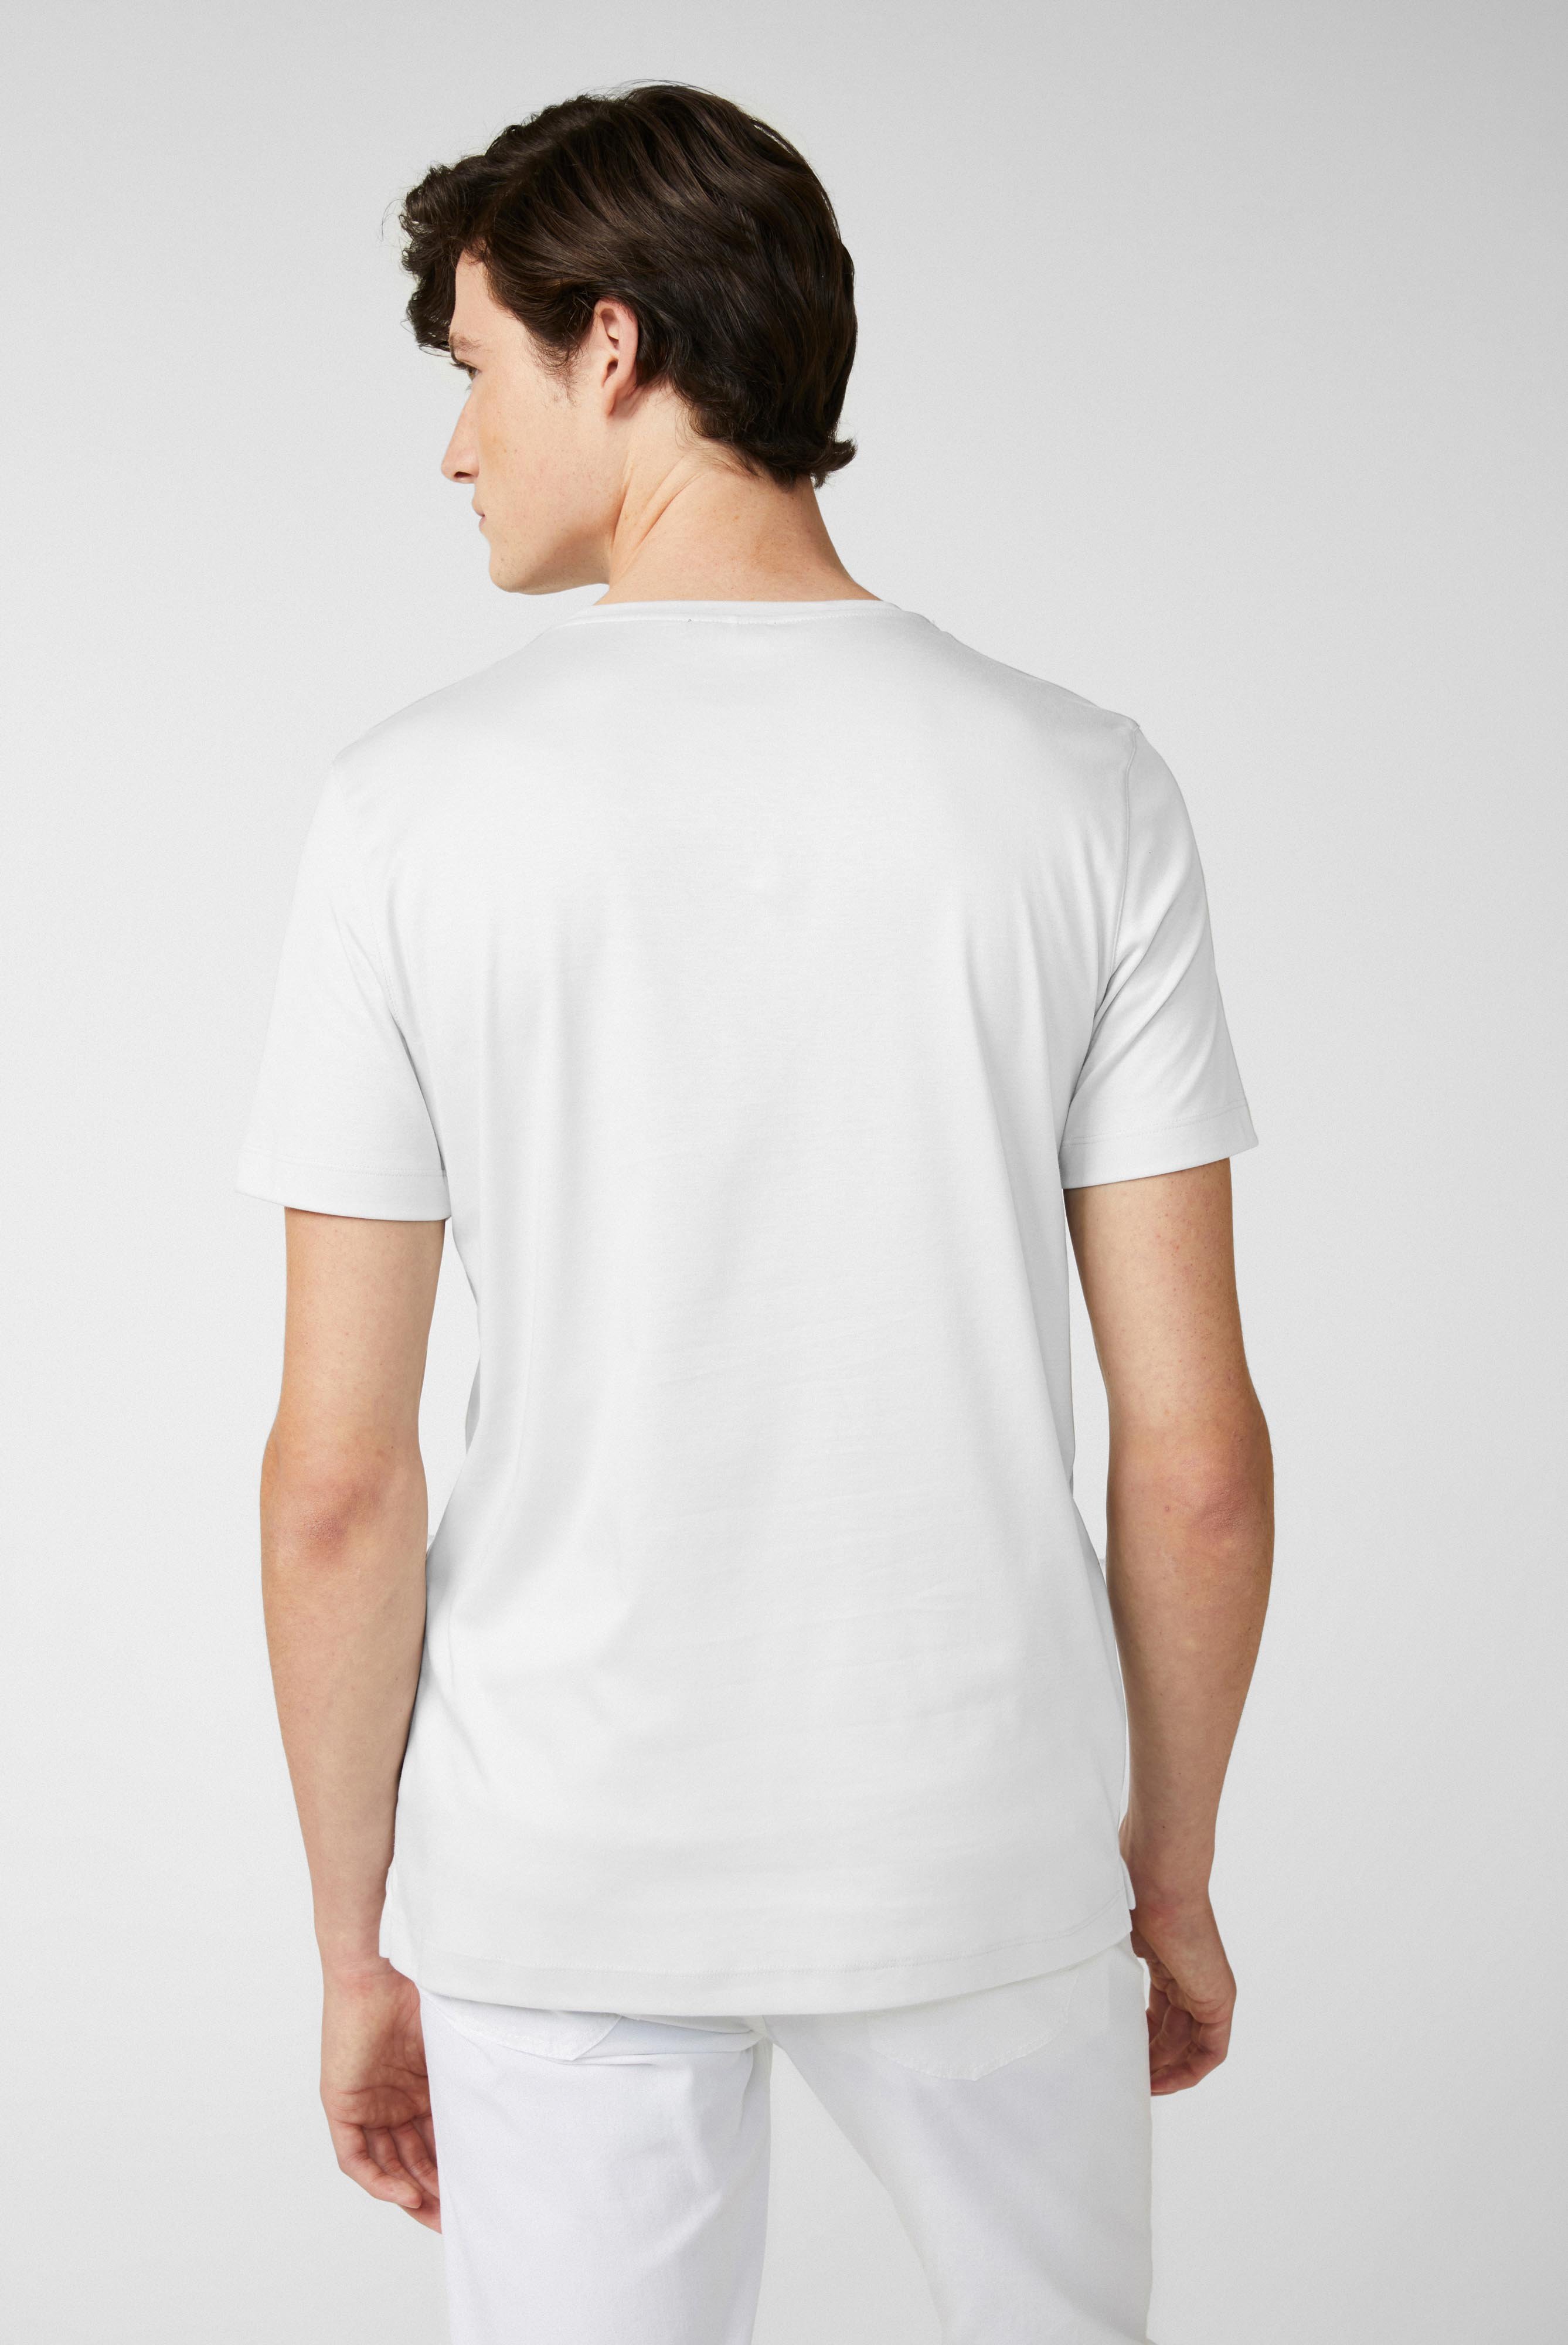 T-Shirts+Swiss Cotton Jersey Crew Neck T-Shirt+20.1717.UX.180031.000.XXL